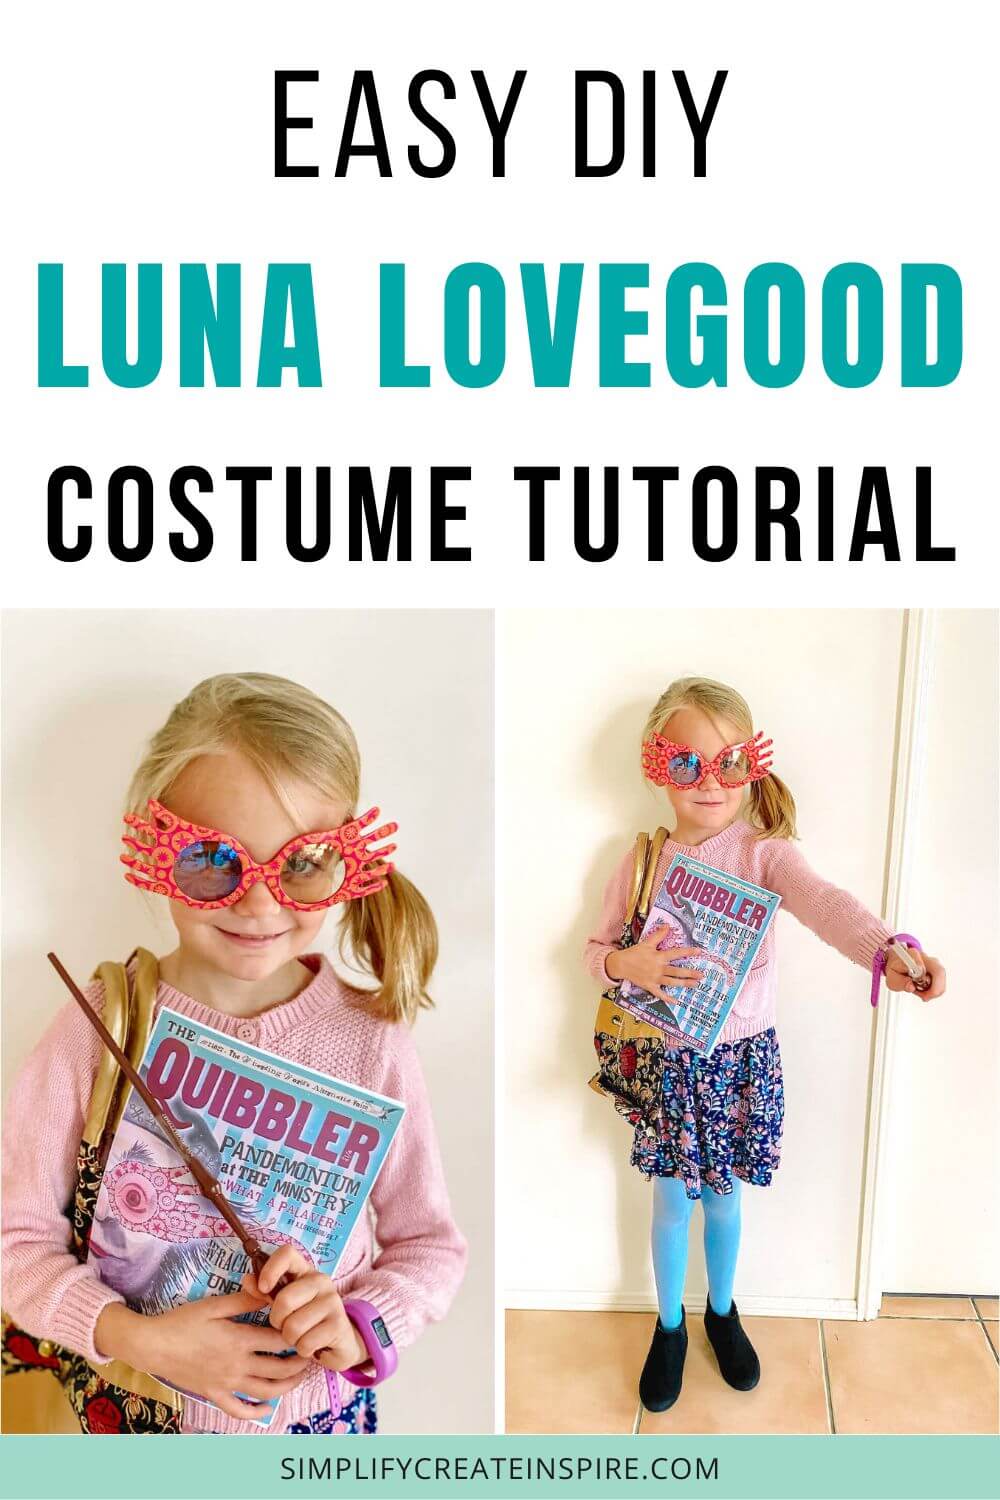 DIY Luna Lovegood costume tutorial